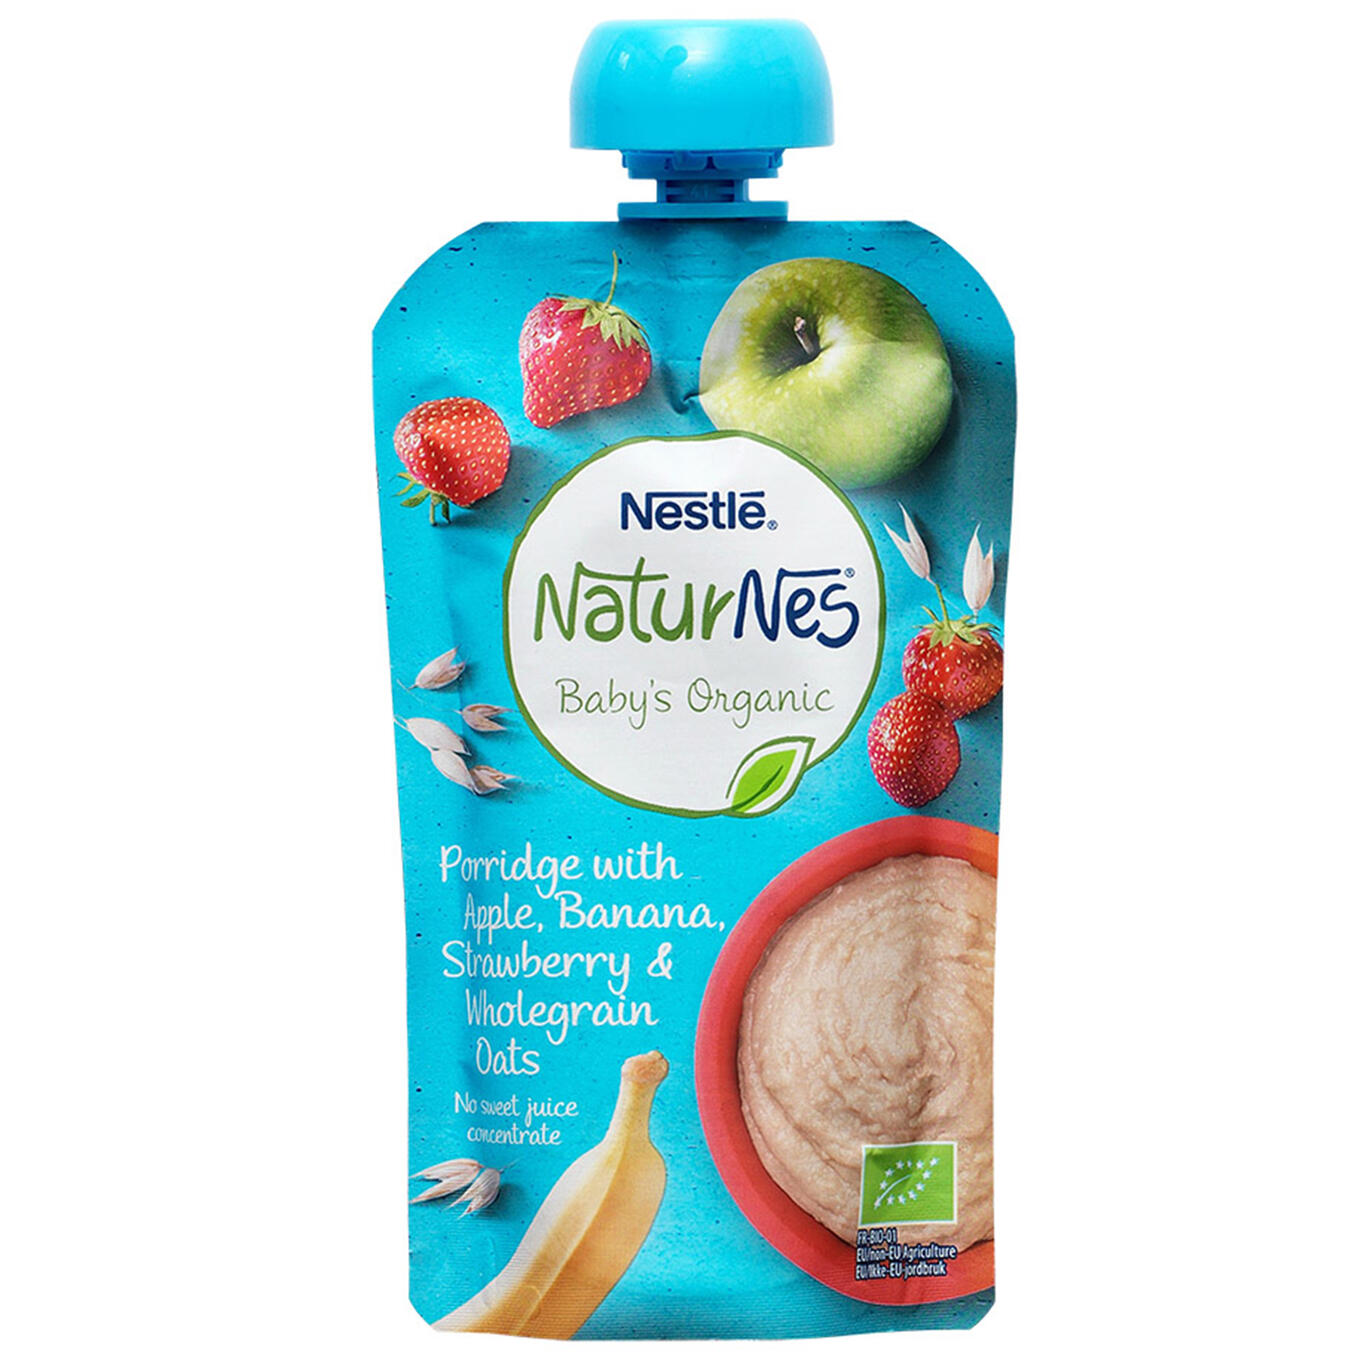 Porridge with Apple, Banana, Strawberry & wholegrain oats Nestlé NaturNes Baby's Organic